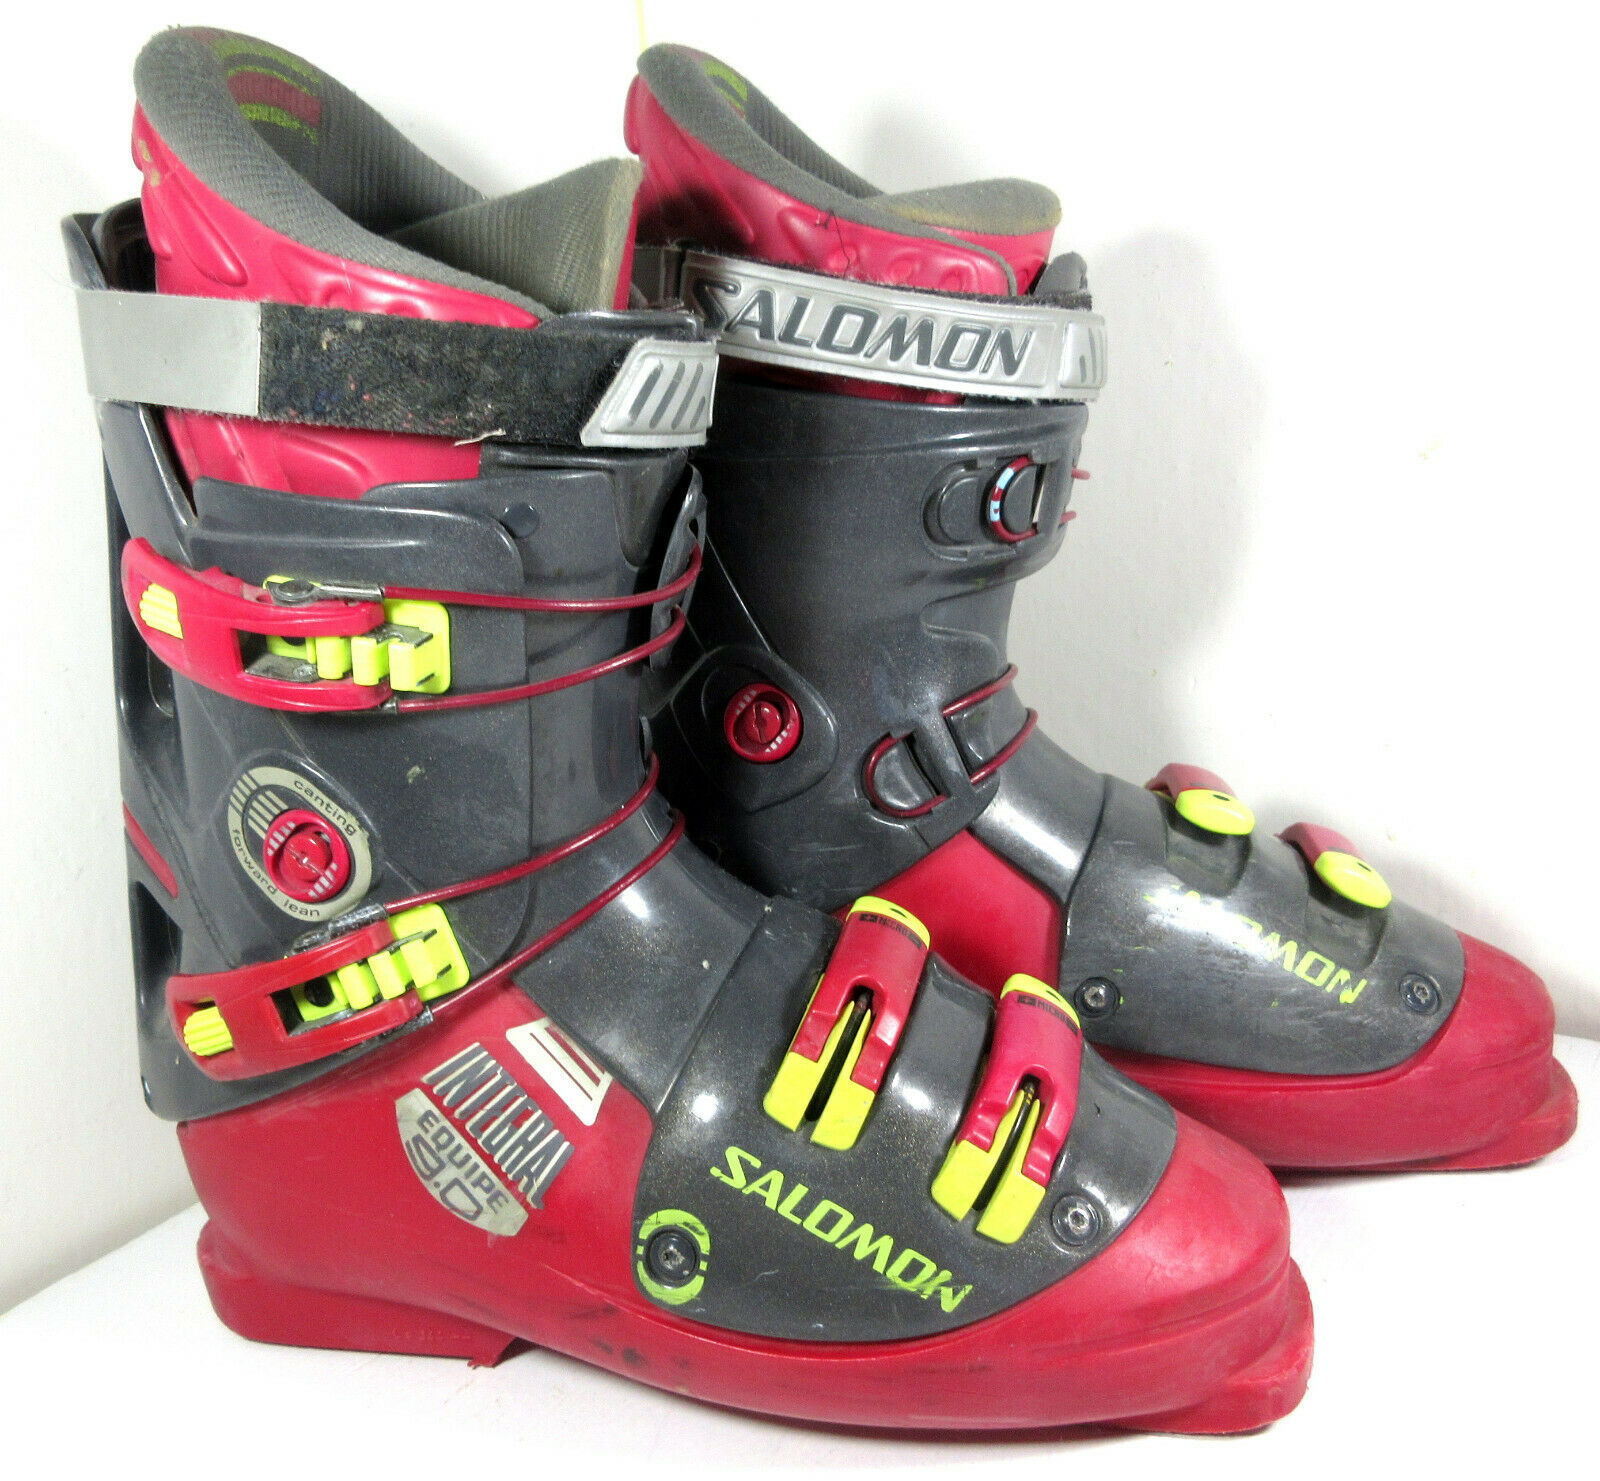 salomon ellipse 8.0 ski boots